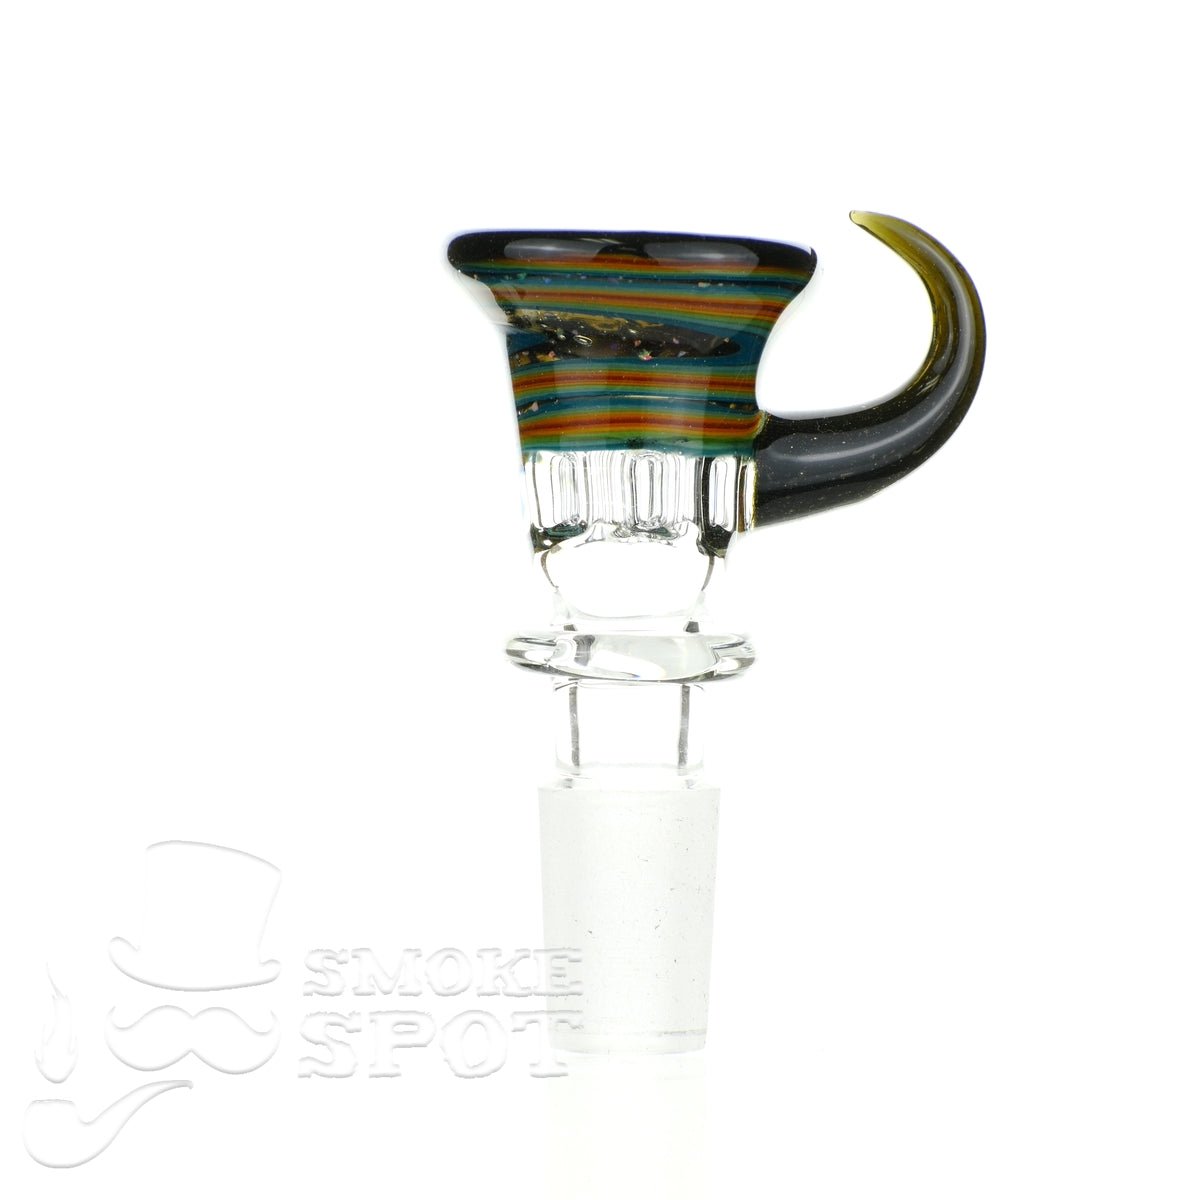 Glass enthuastic bowl 14 mm with a hook #103 - Smoke Spot Smoke Shop